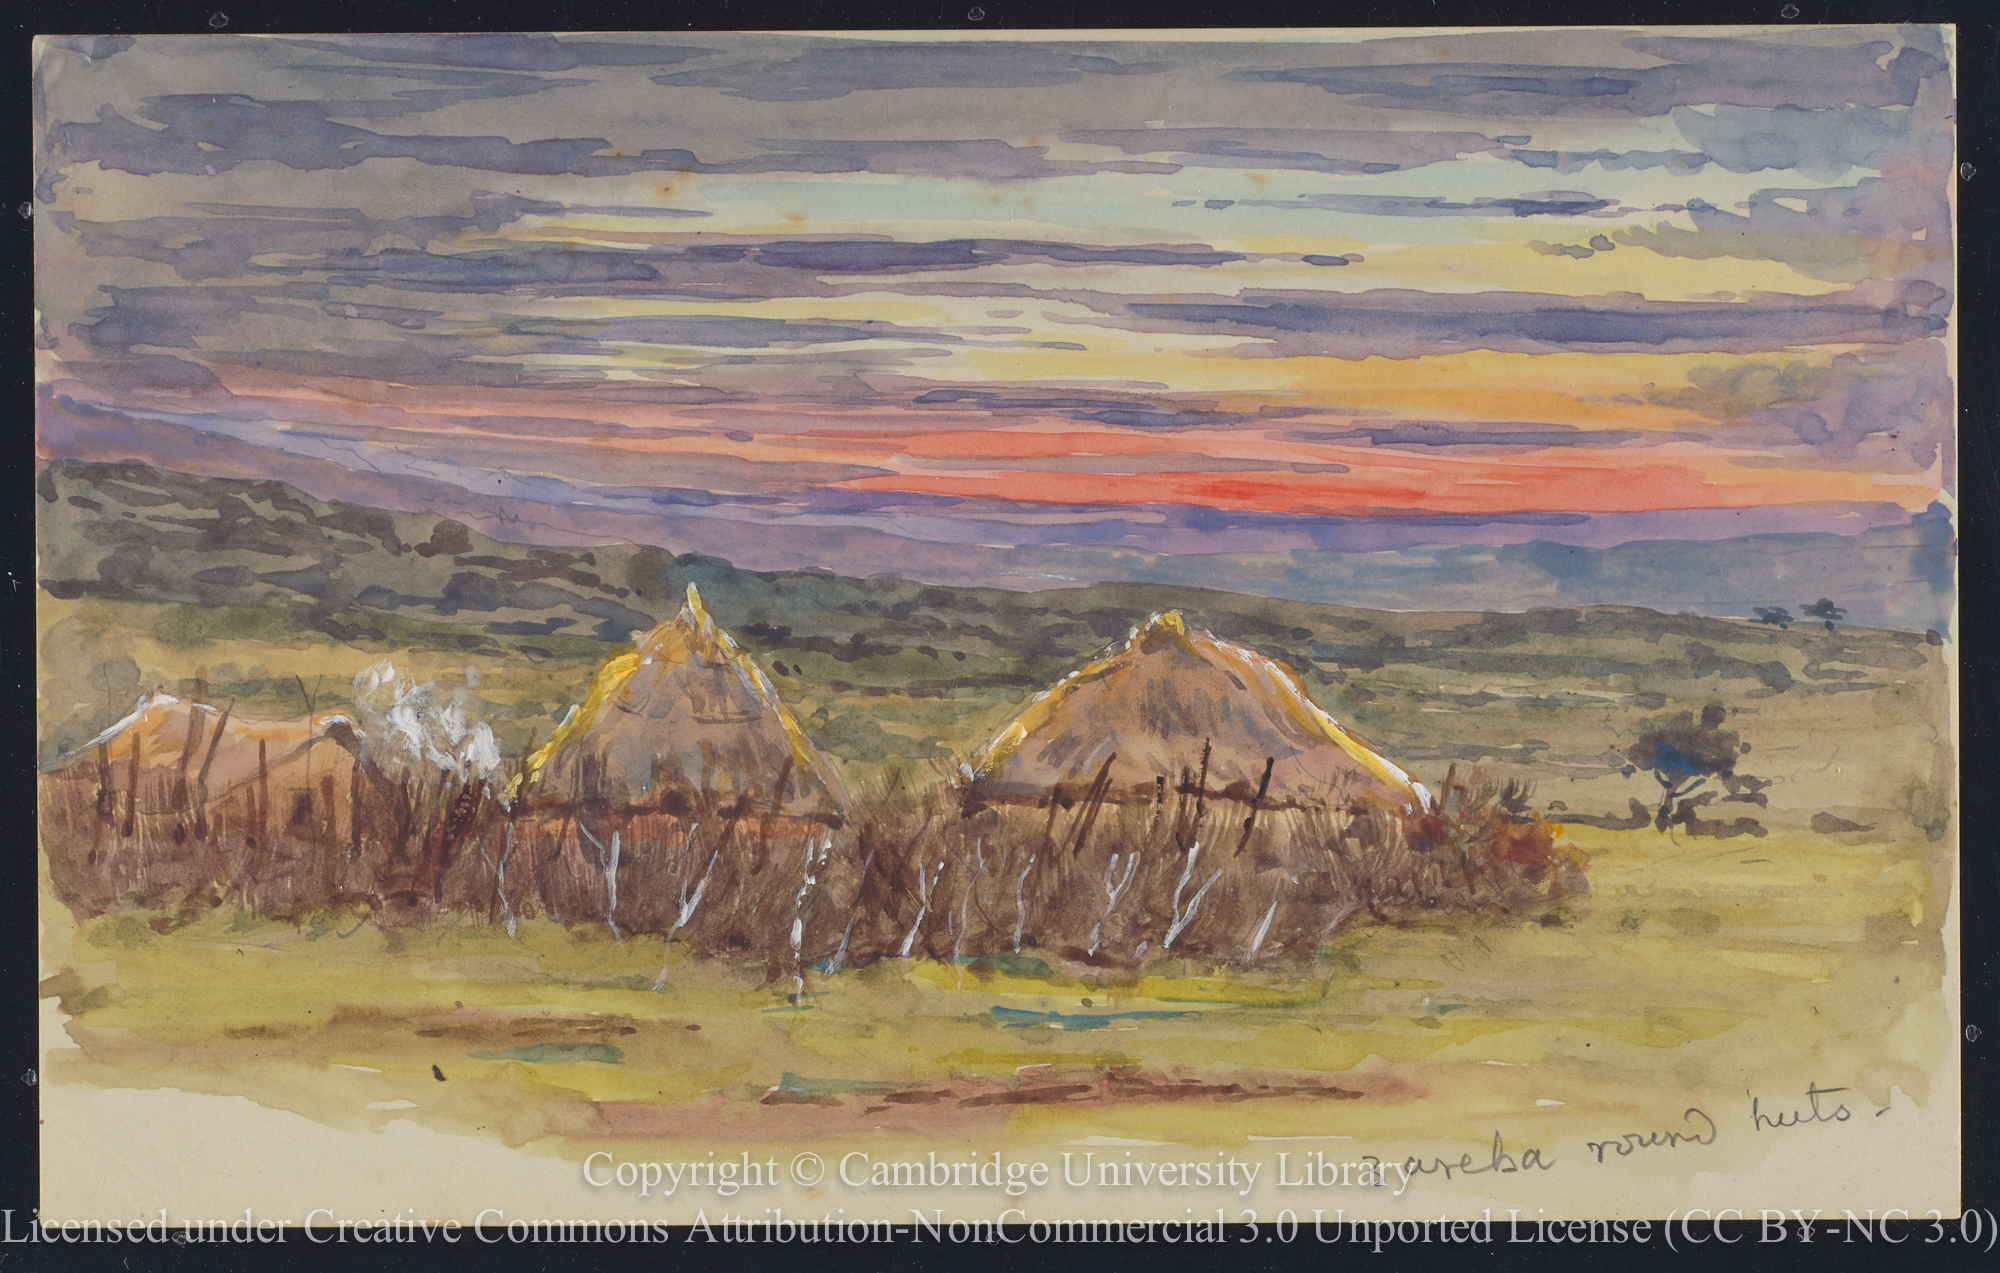 Kongoni camp: fourteenth encampment; three zariba round huts